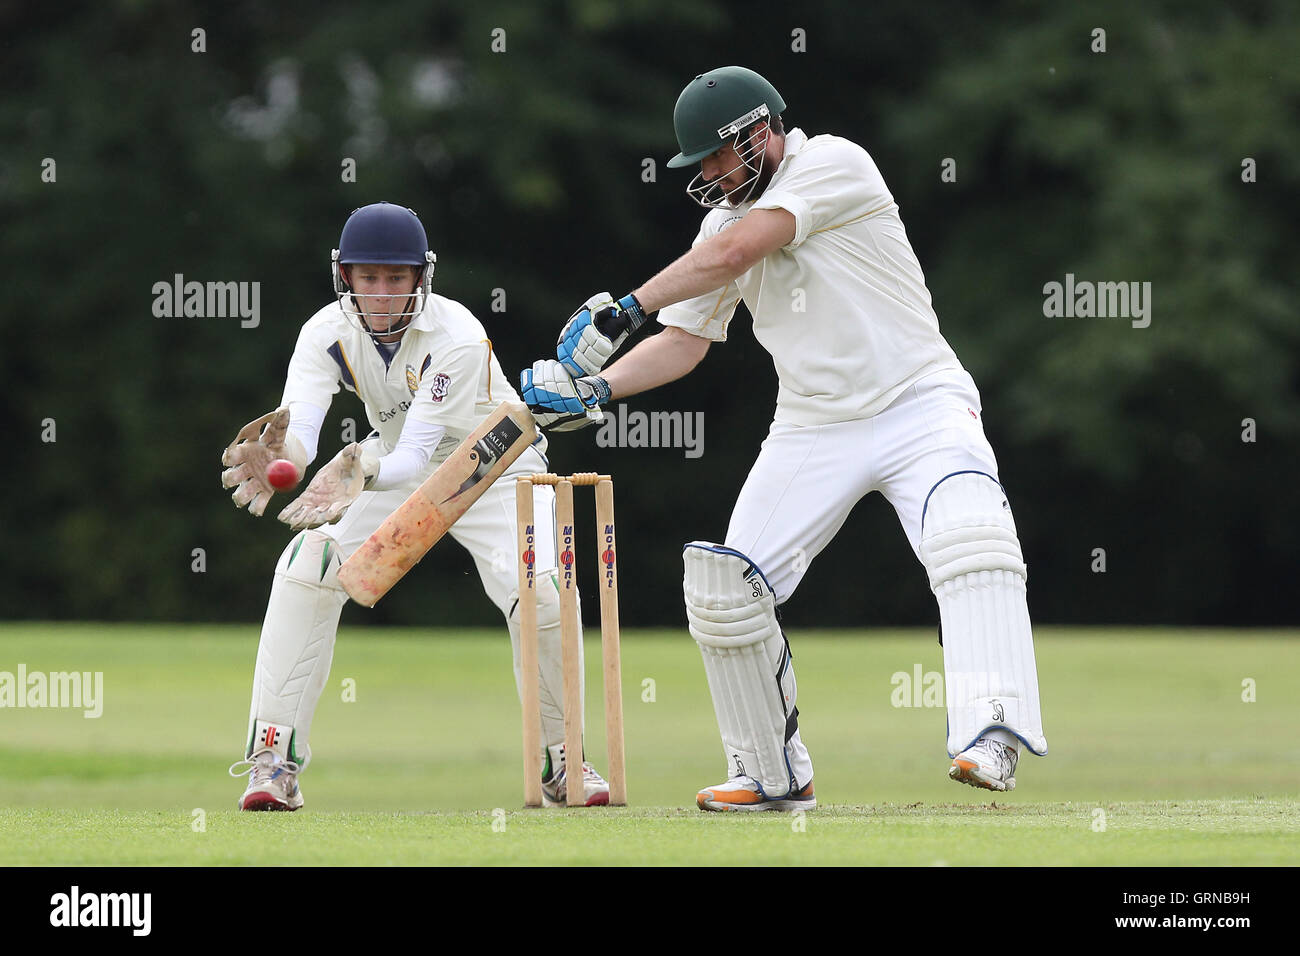 Matthew Tarr in batting action for Gidea Park - Gidea Park & Romford CC vs Horndon-on-the-Hill CC - Essex Cricket League at Gallows Corner - 30/08/14 Stock Photo